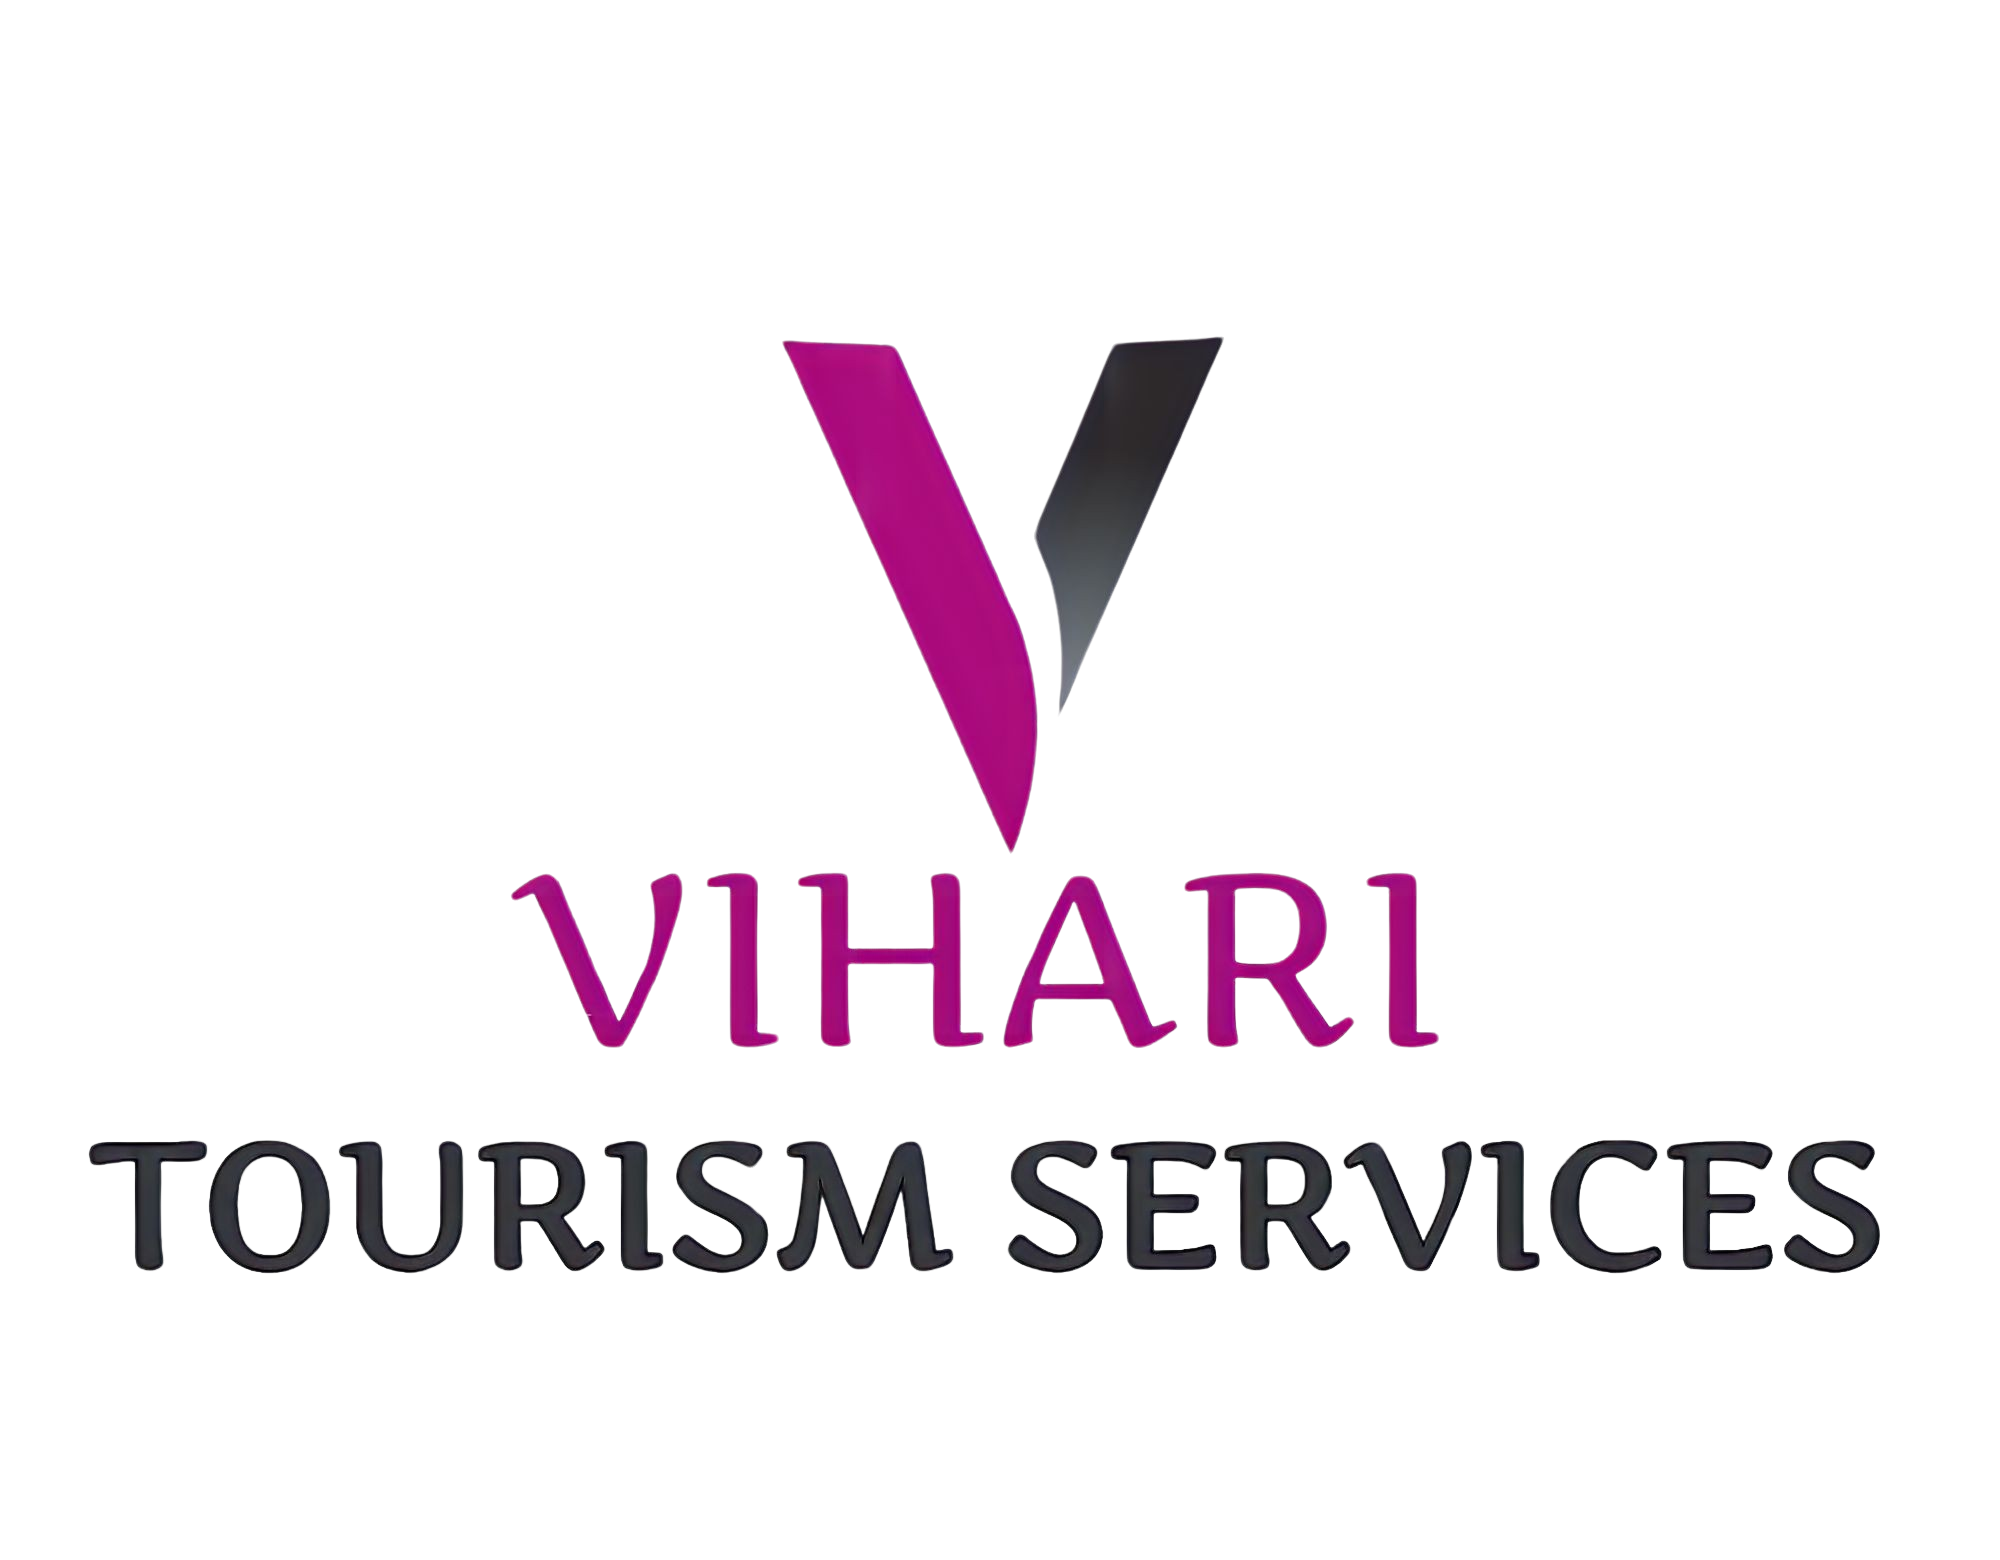 telangana tourism hotel visakhapatnam